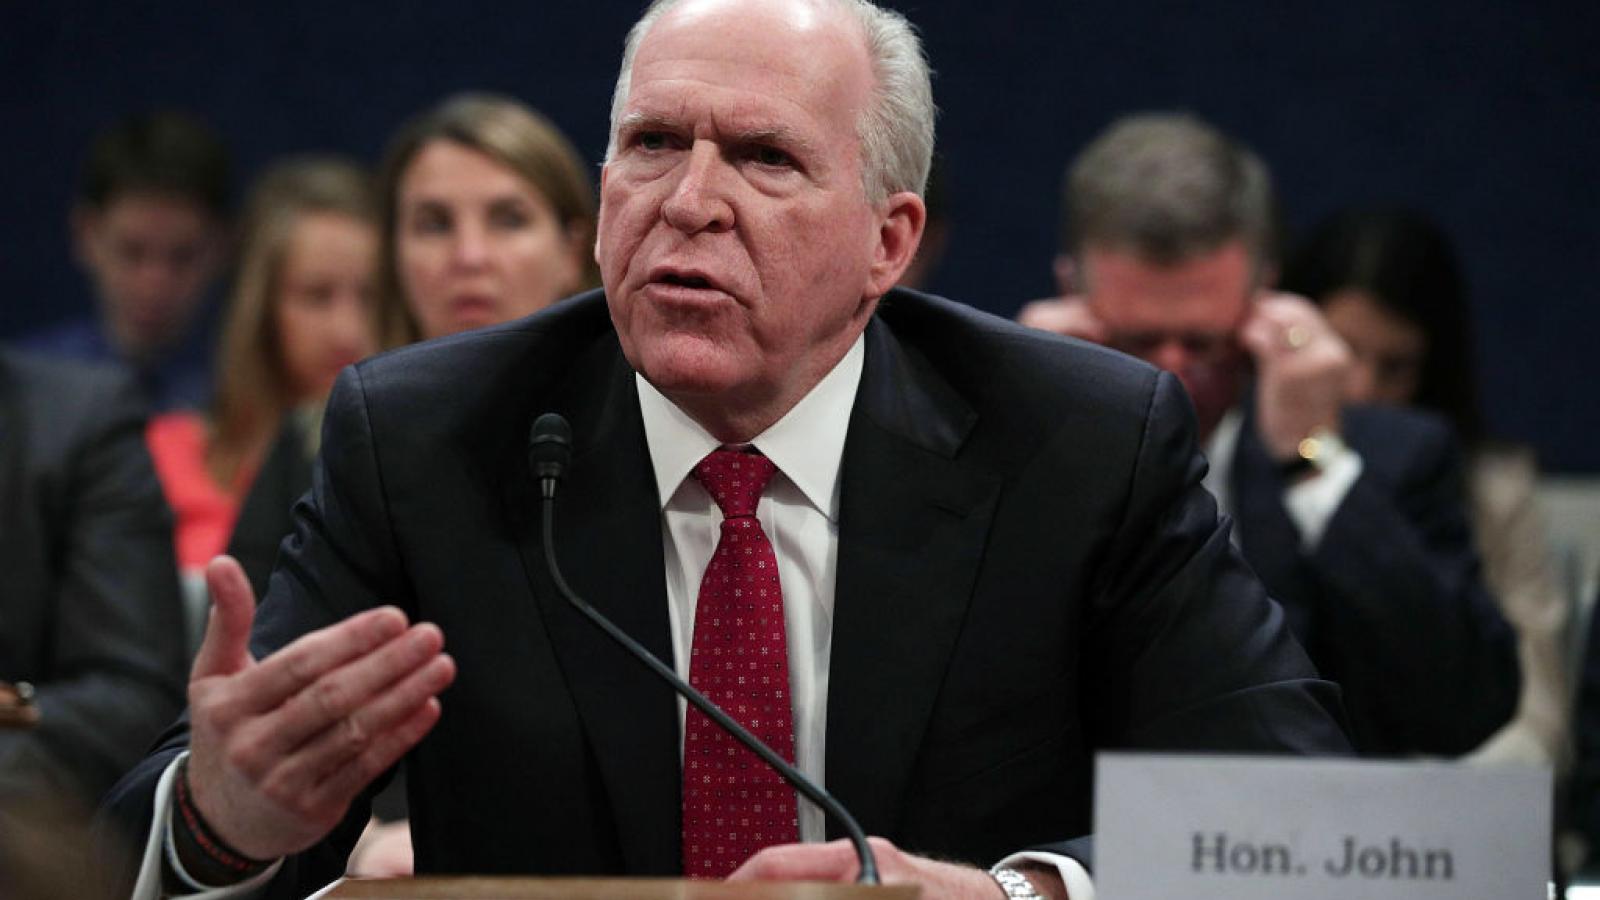 Former CIA director John Brennan